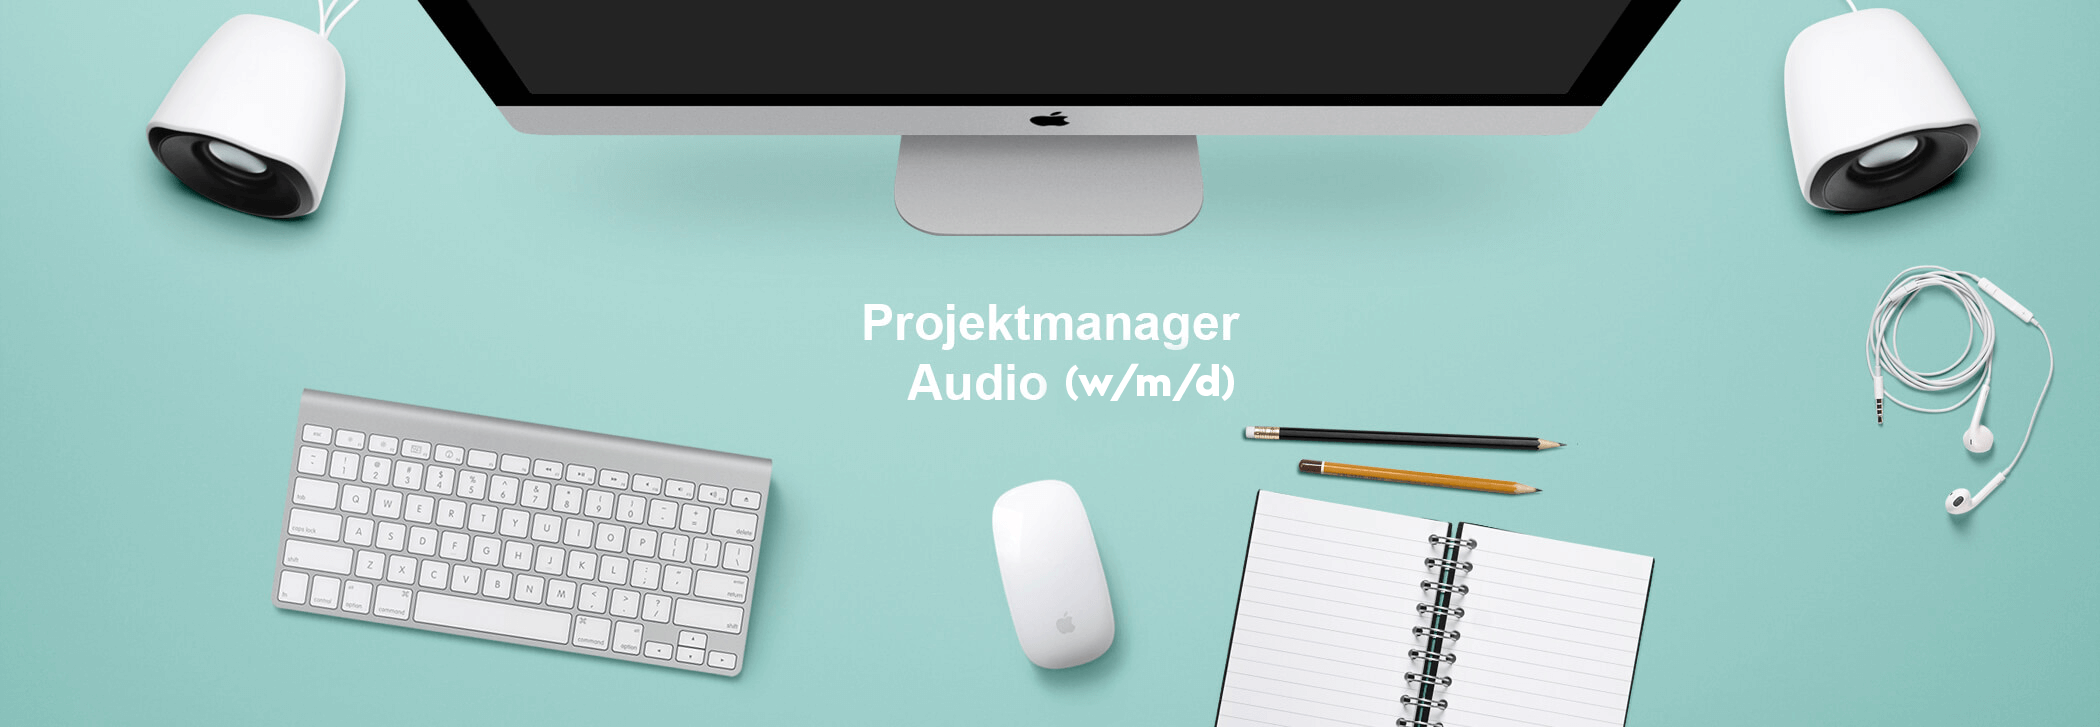 Projektmanager-Audio